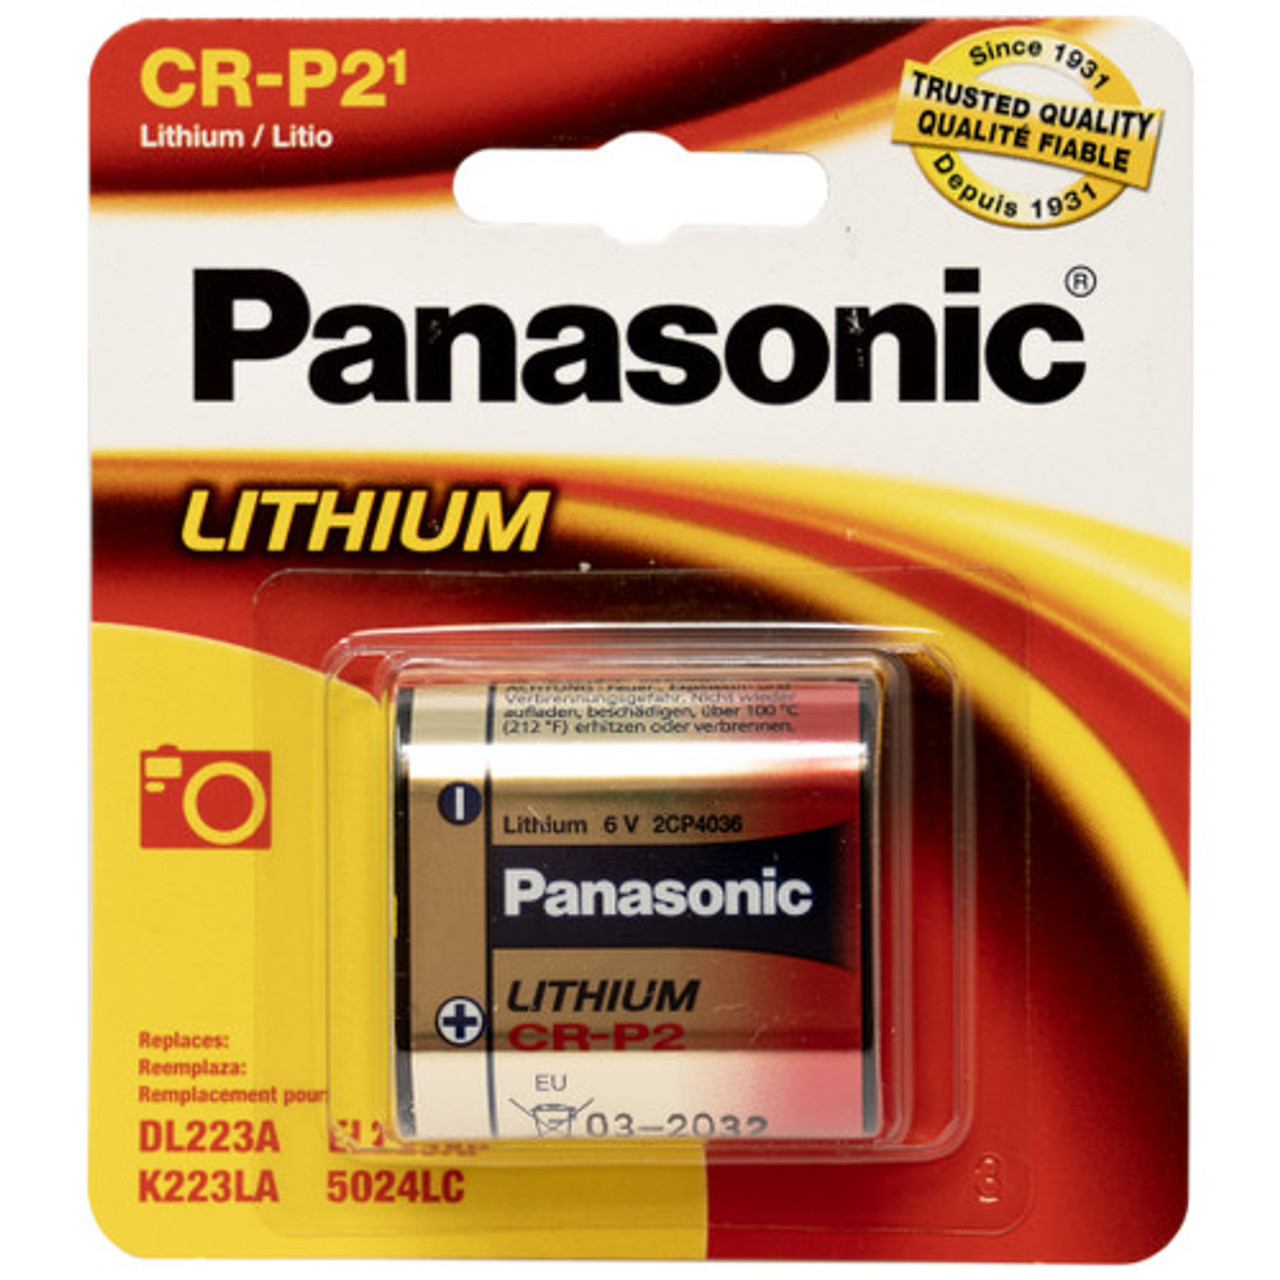 Panasonic CRP2 CR-P2 6v Lithium Photo Battery